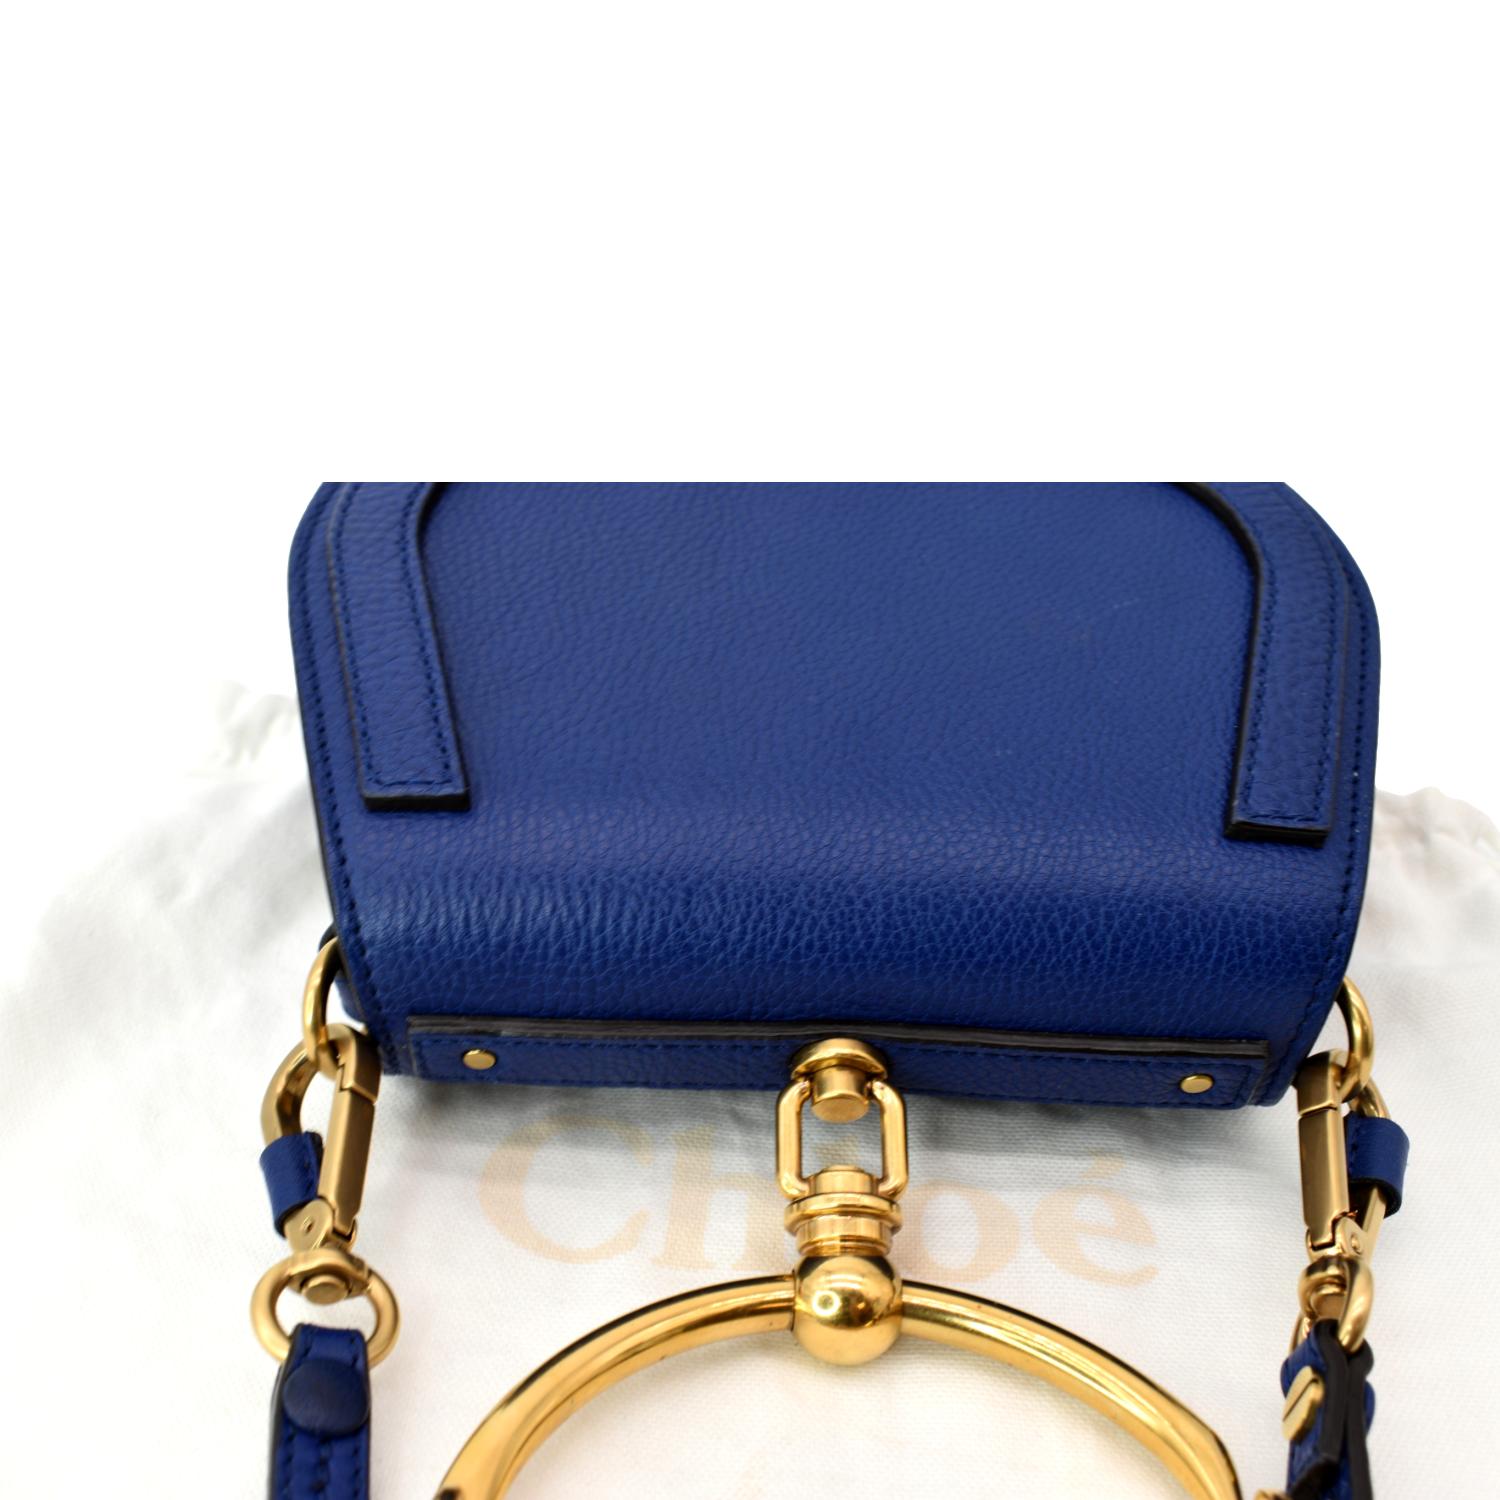 Bracelet nile leather crossbody bag Chloé Brown in Leather - 32867665